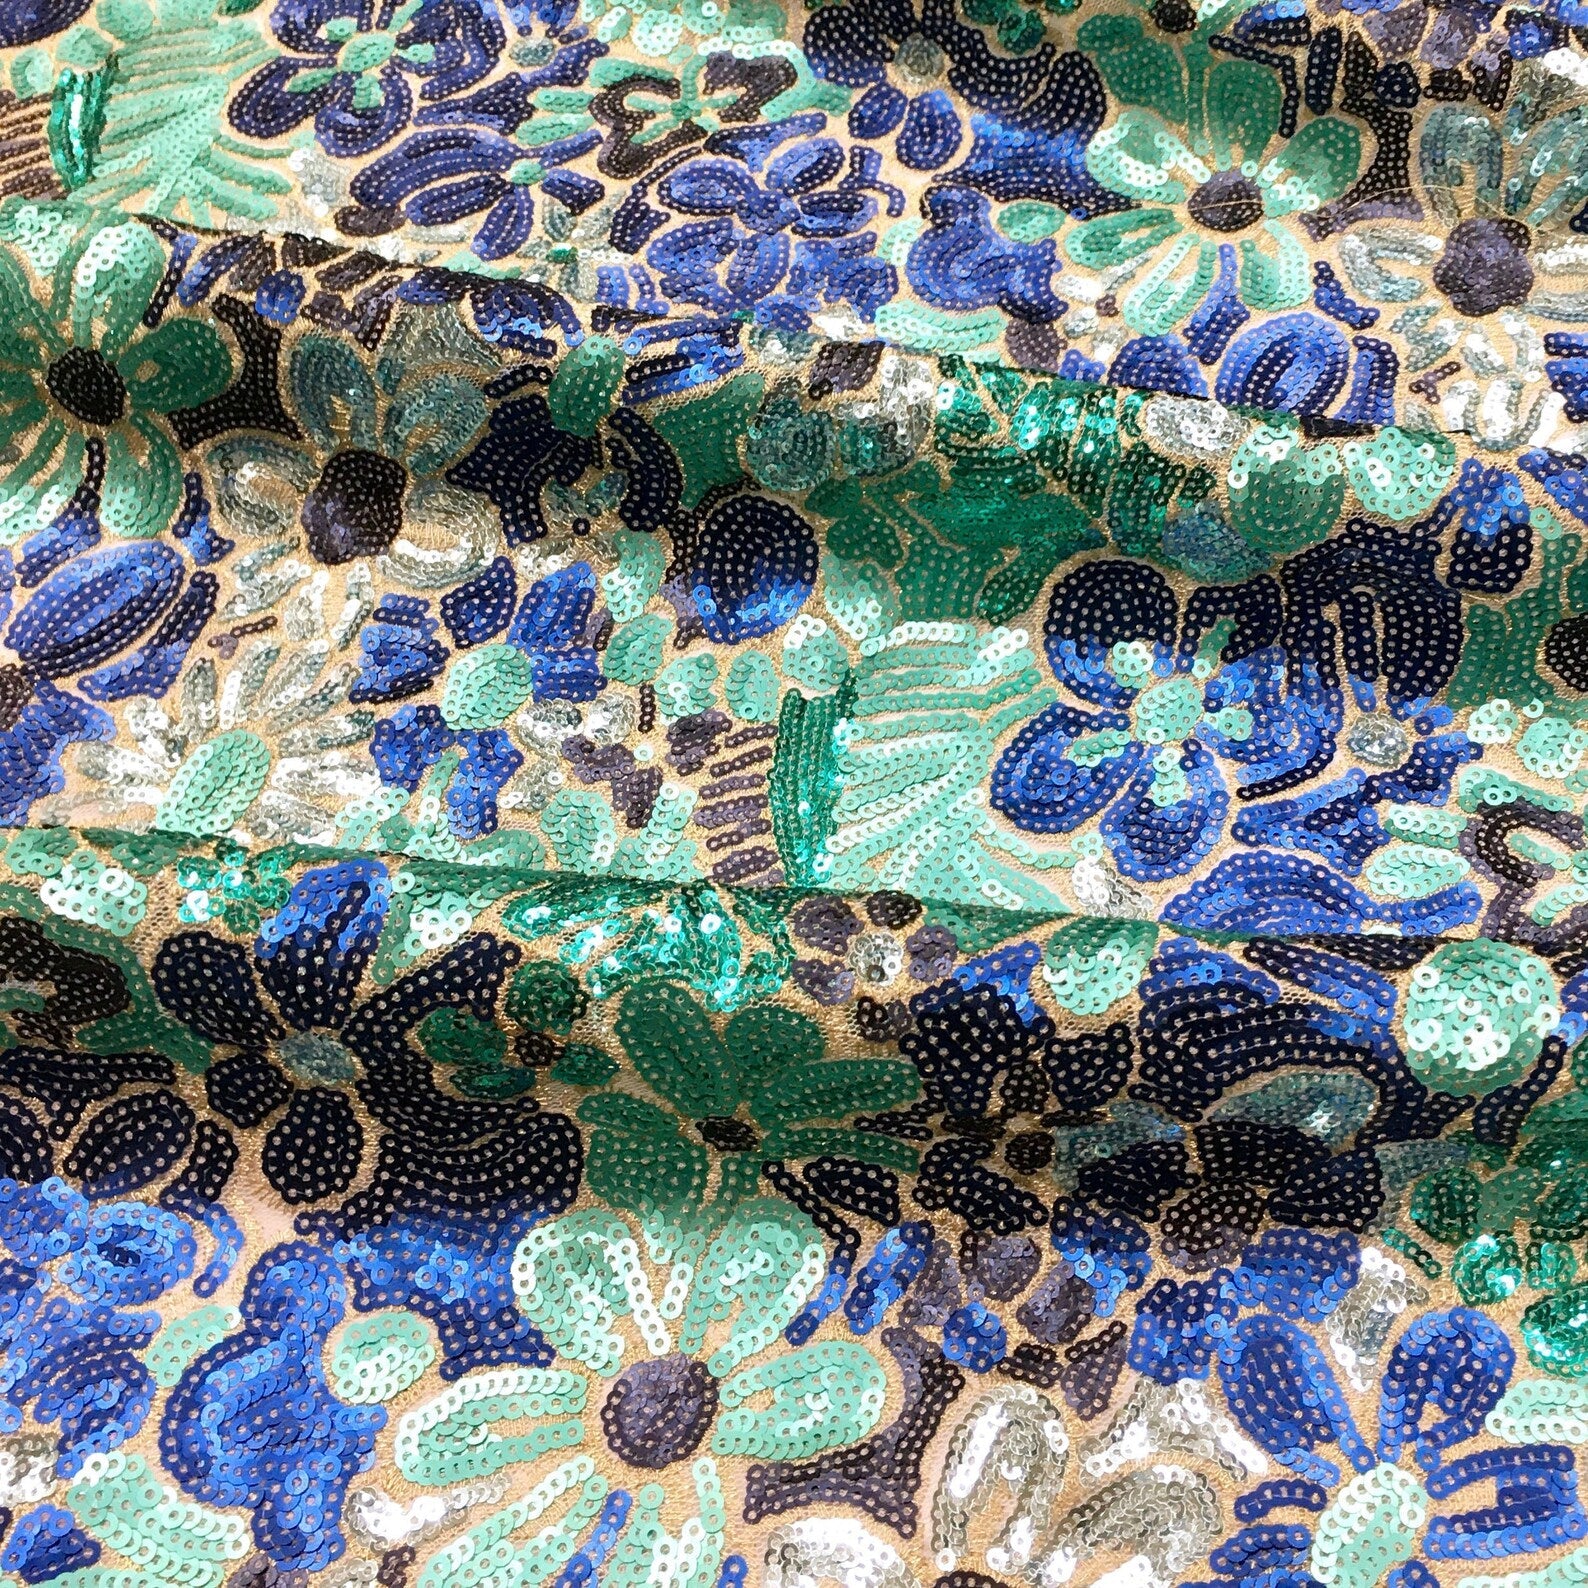 5 YARDS / 6 COLORS / Linoa Iridescent Glitter Sequin Embroidery